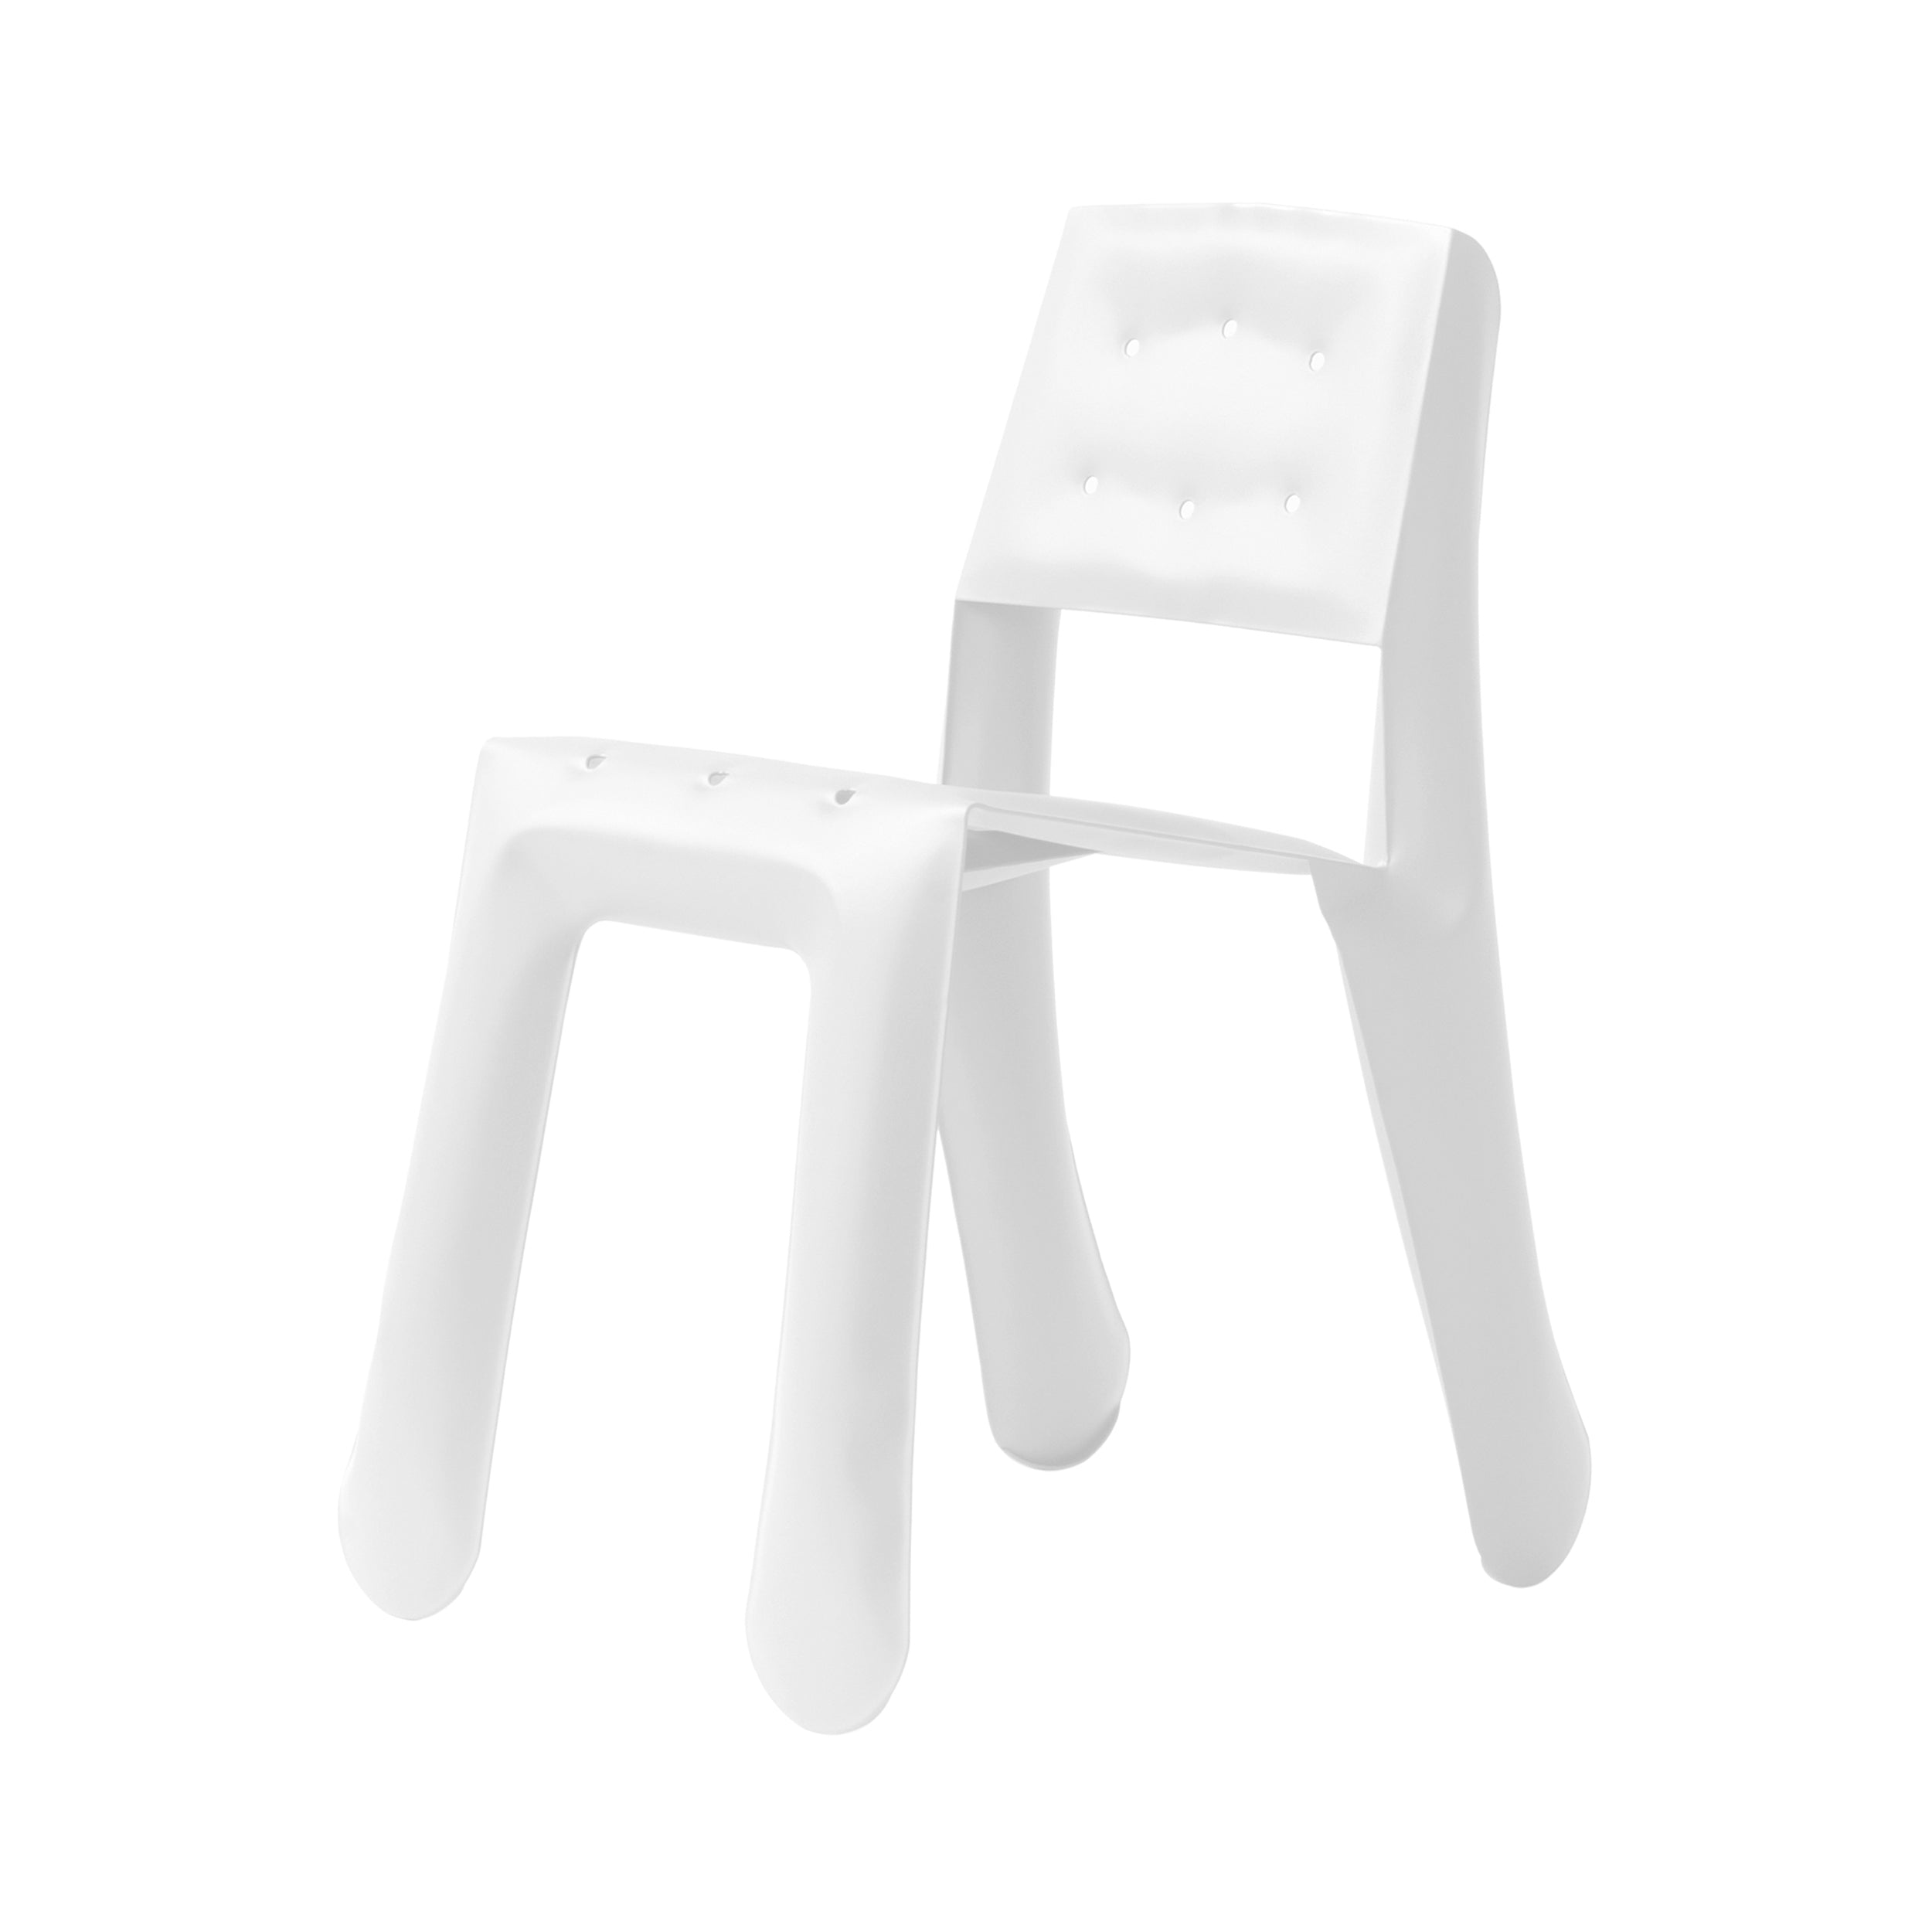 Chippensteel 0.5 Chair: White Aluminum